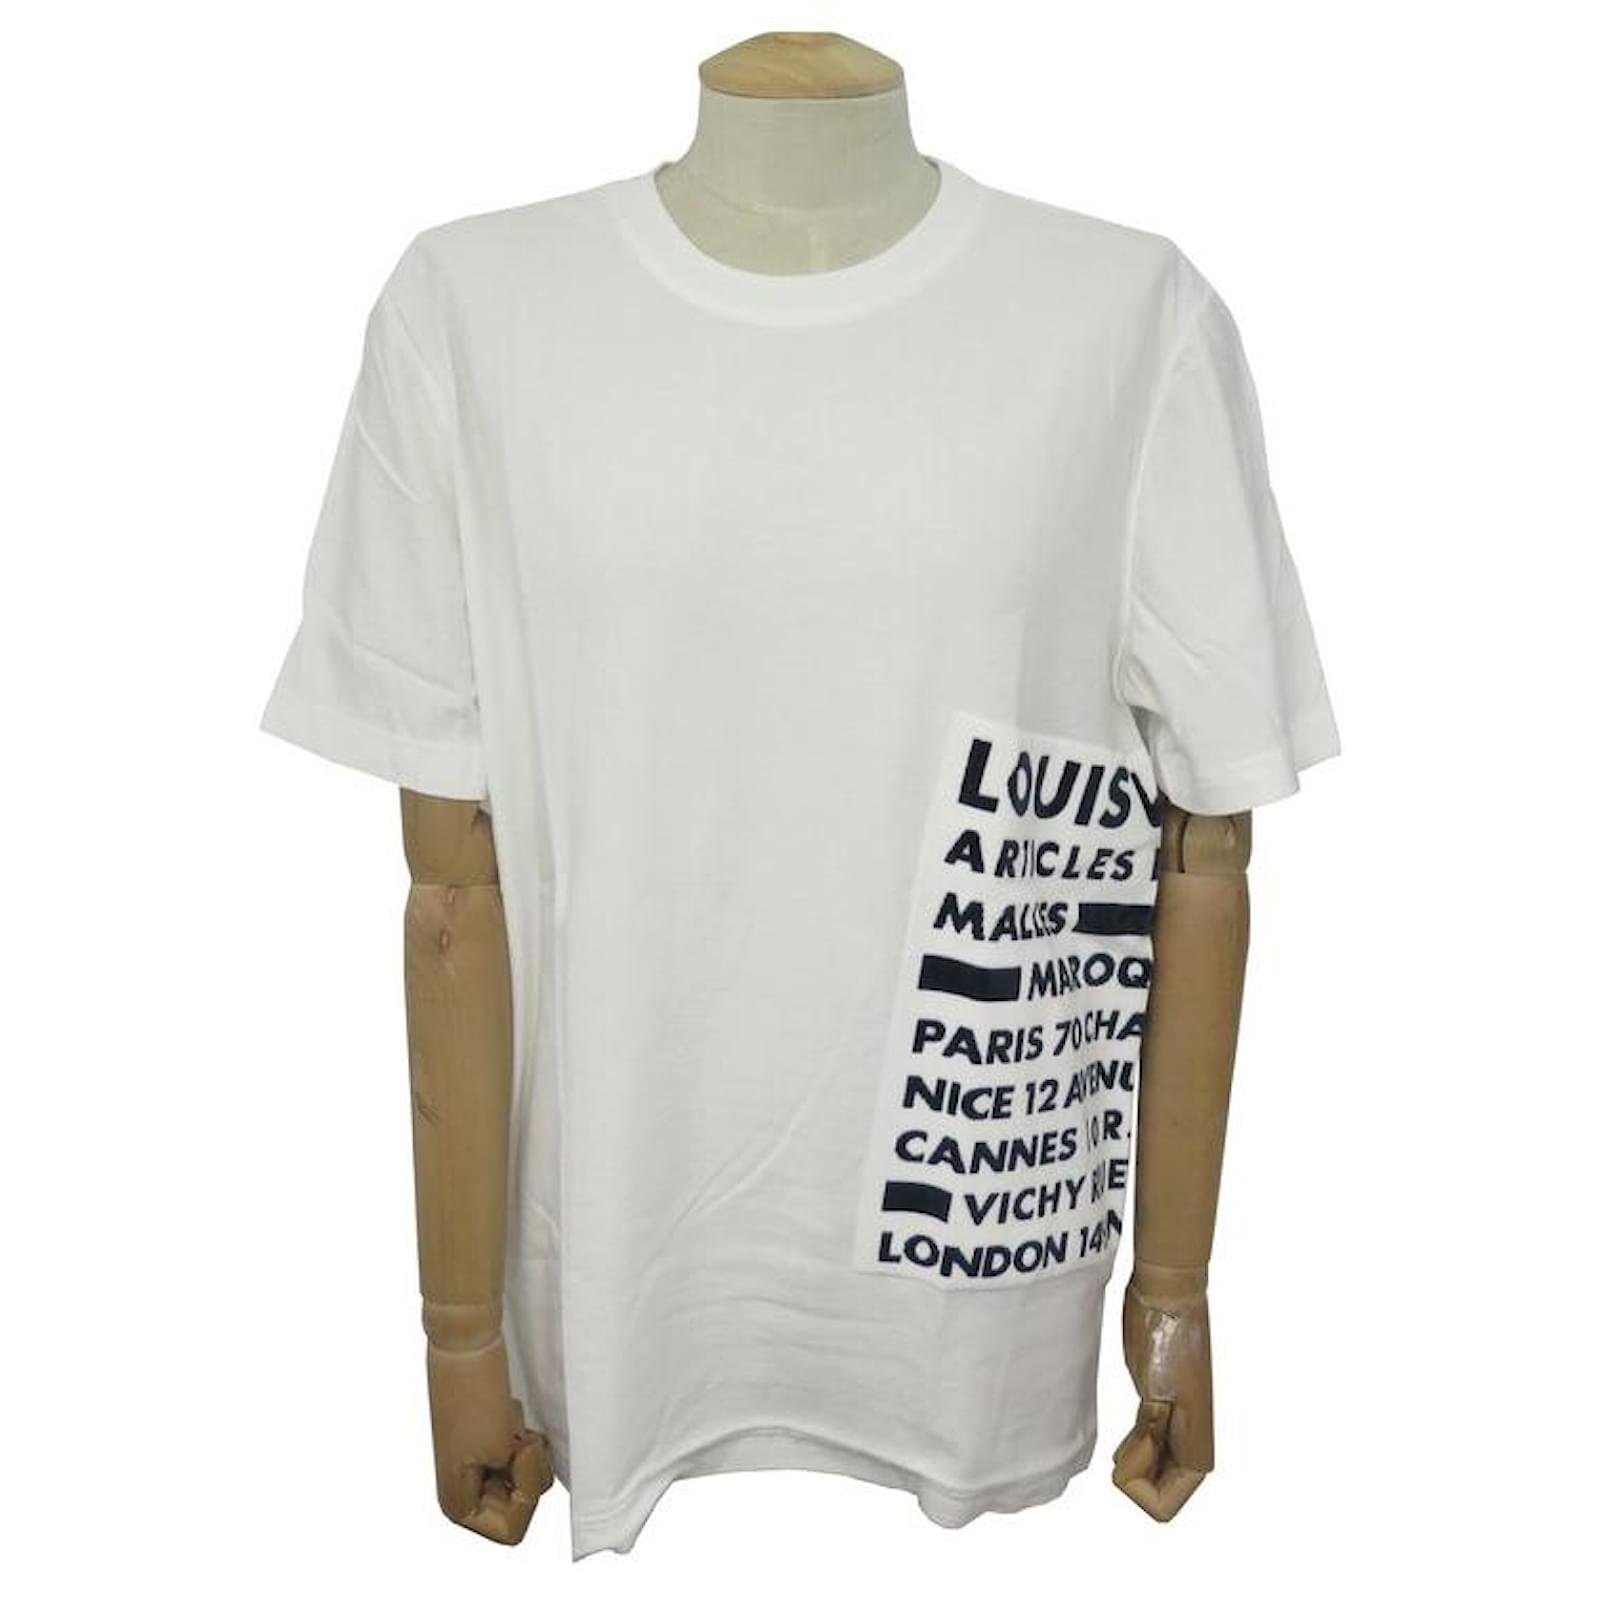 LOUIS VUITTON Shirts Louis Vuitton Cotton For Male XL